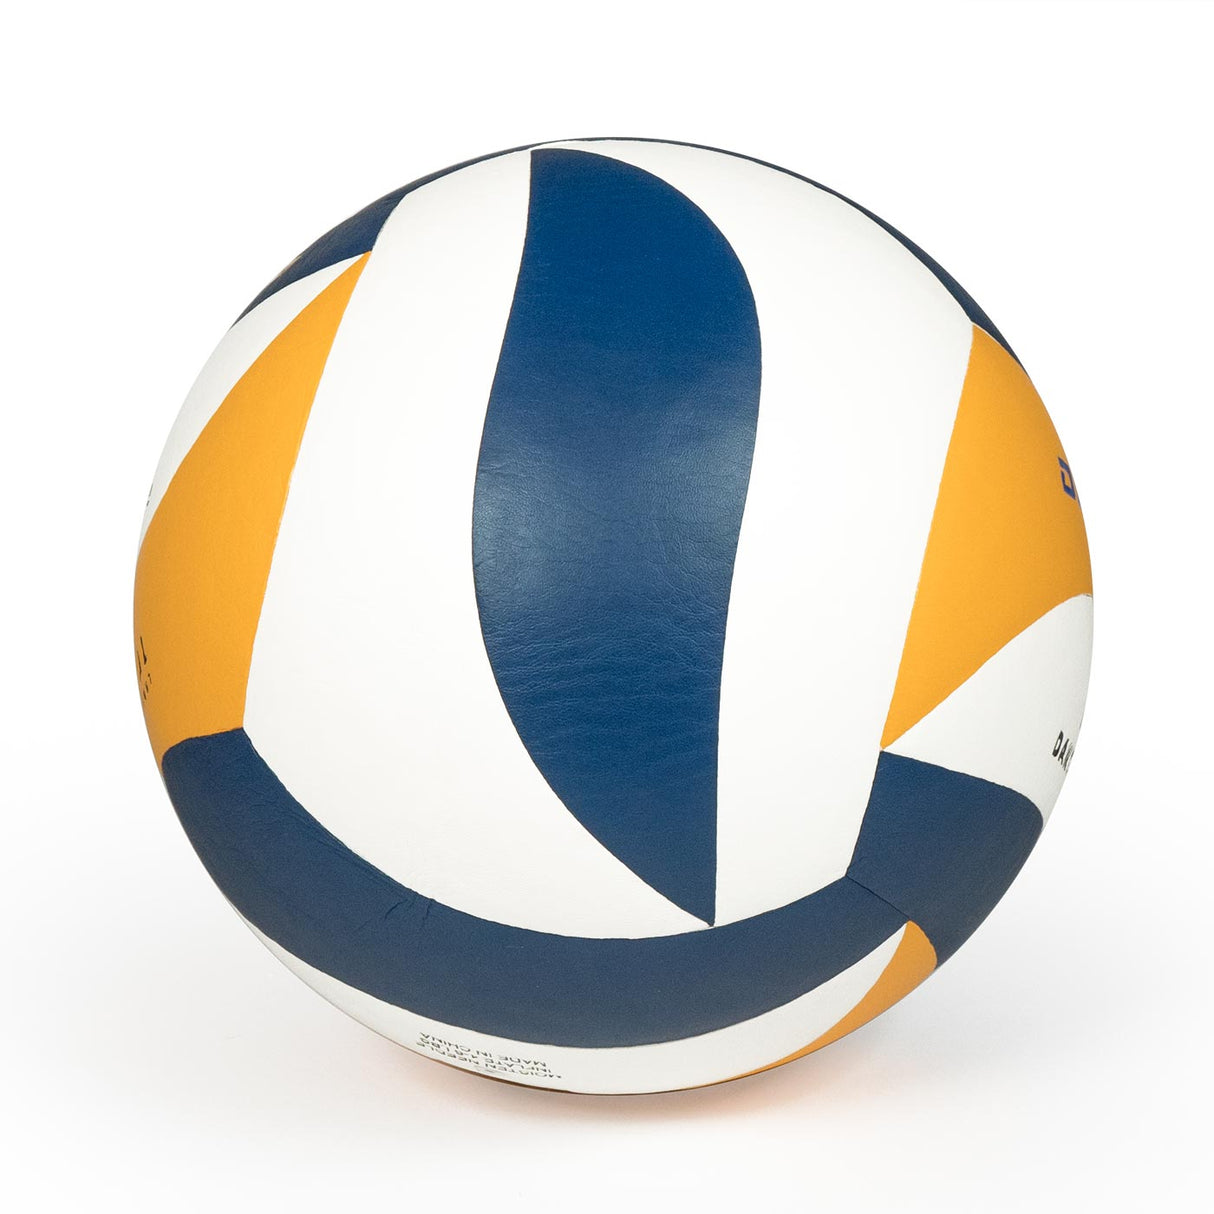 DSV5000 Volleyball - Size 5